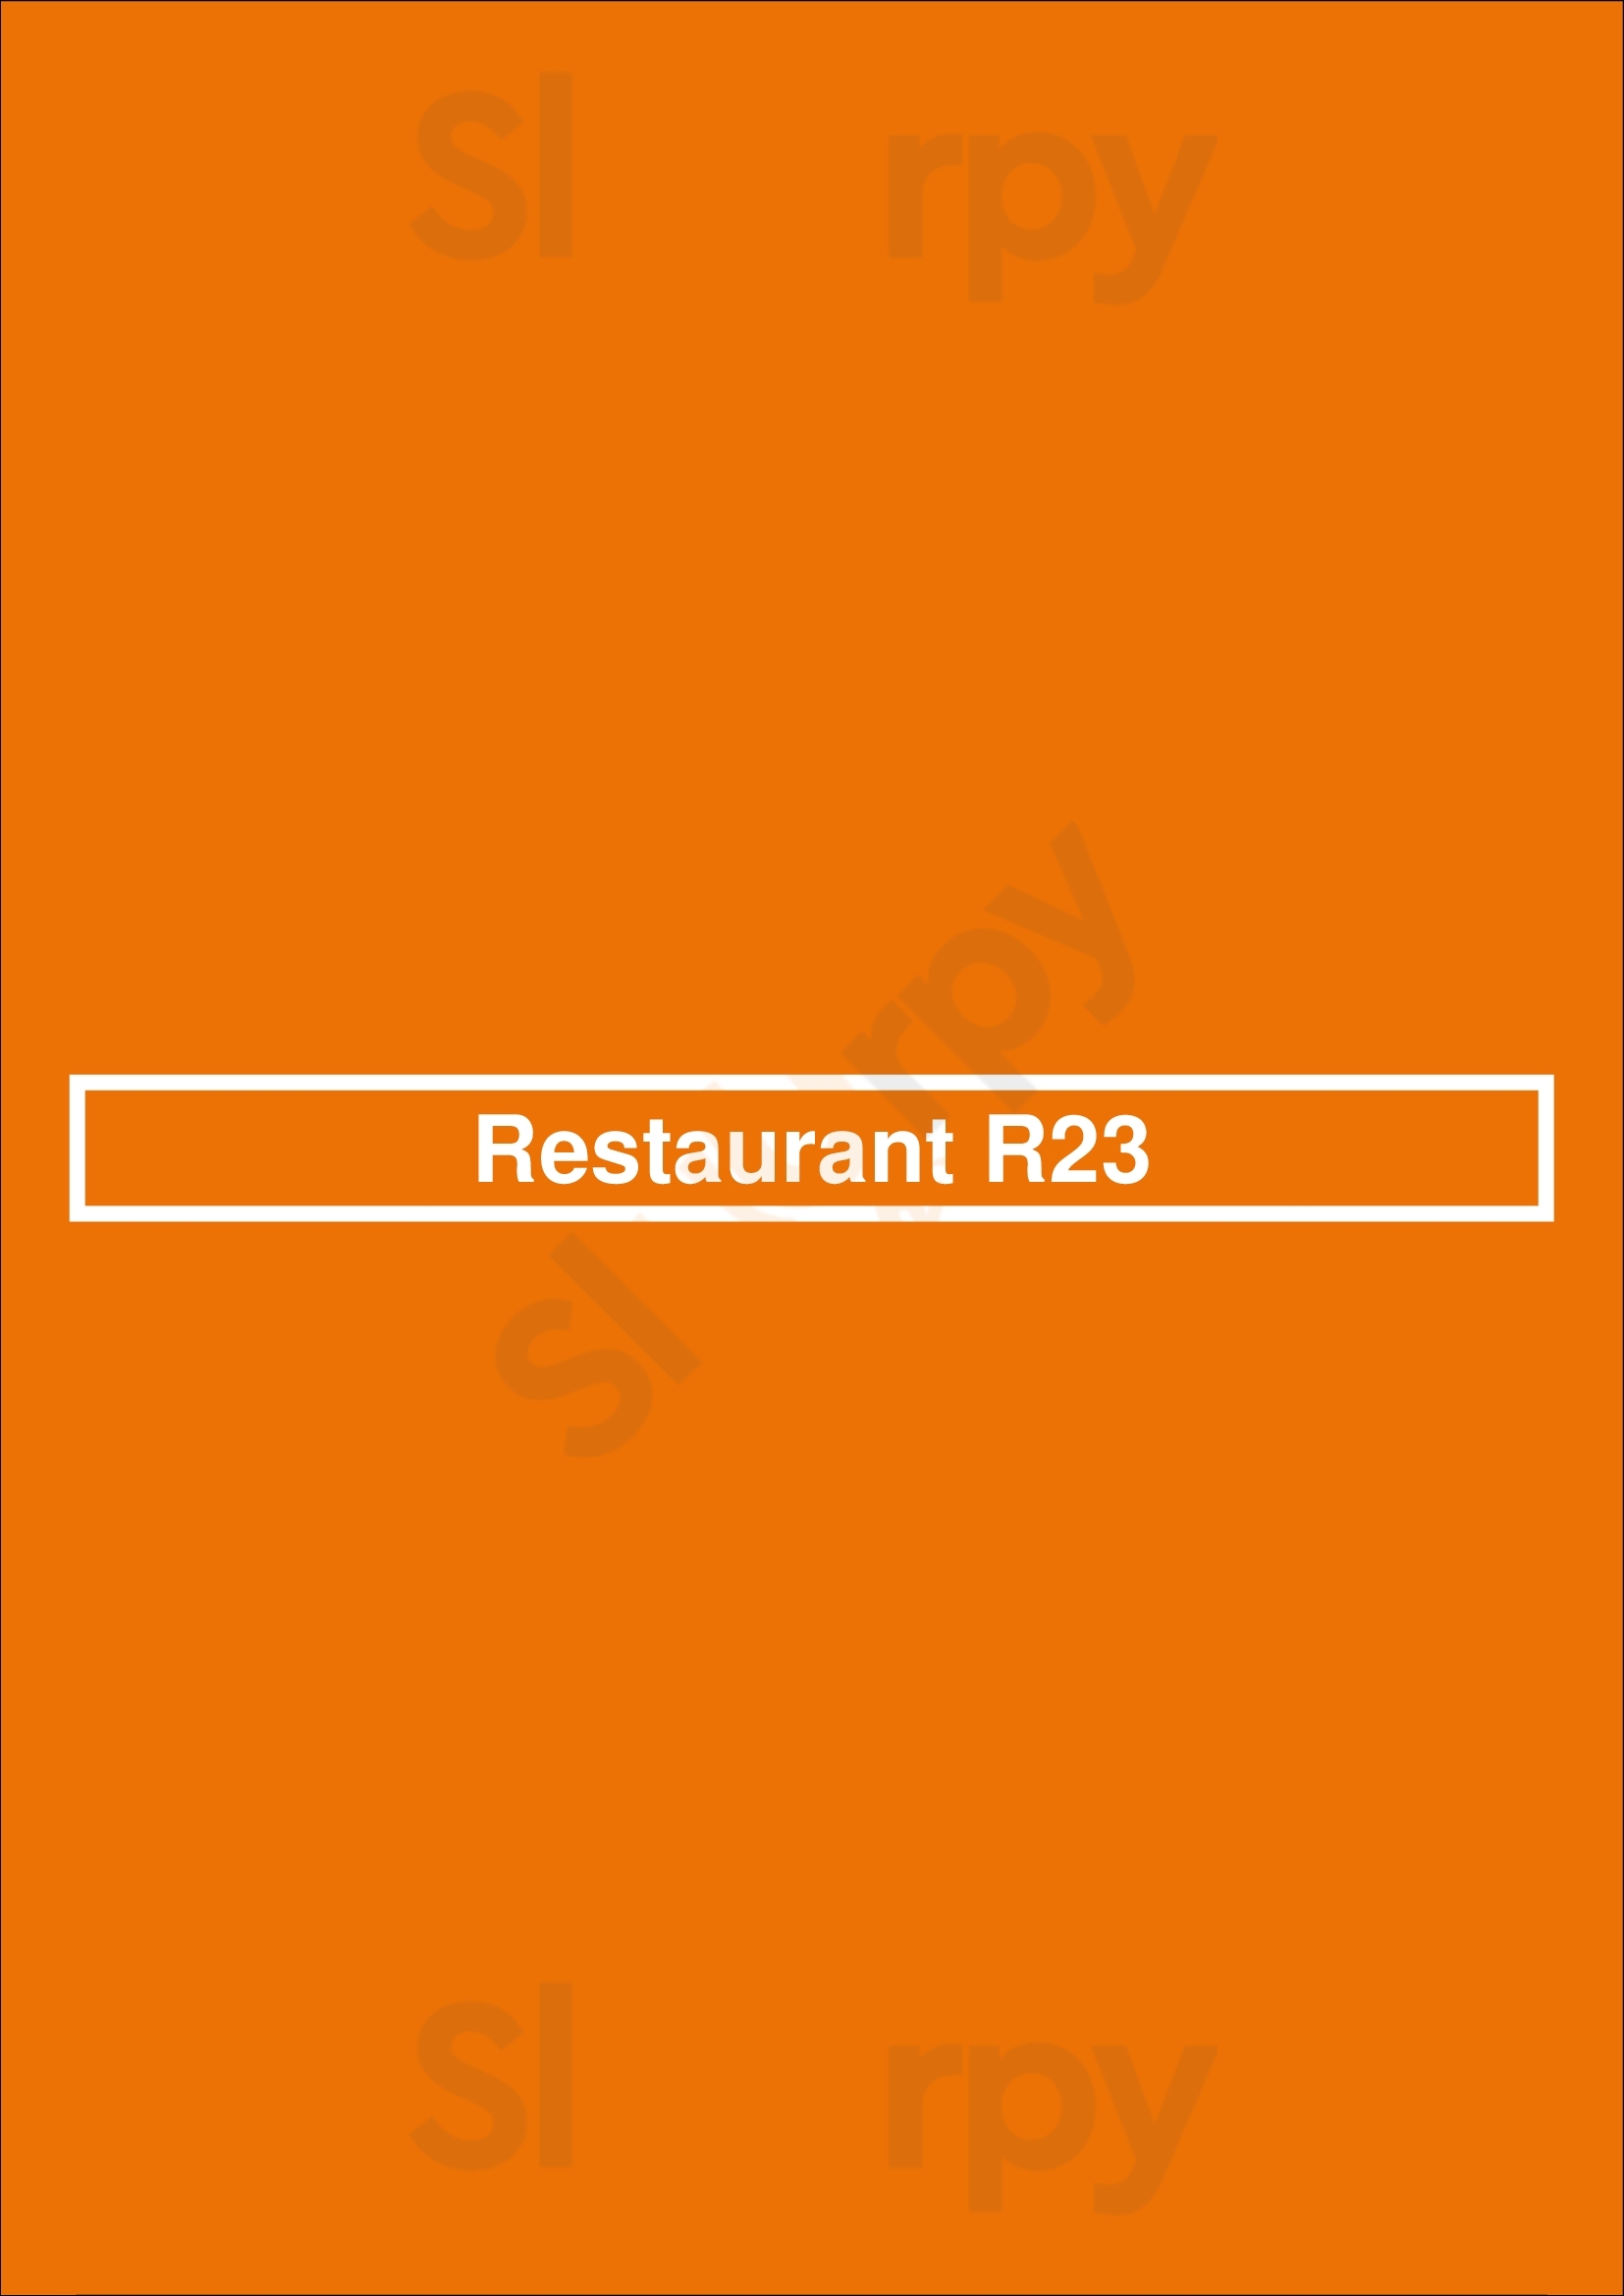 Restaurant R23 Berlin Menu - 1